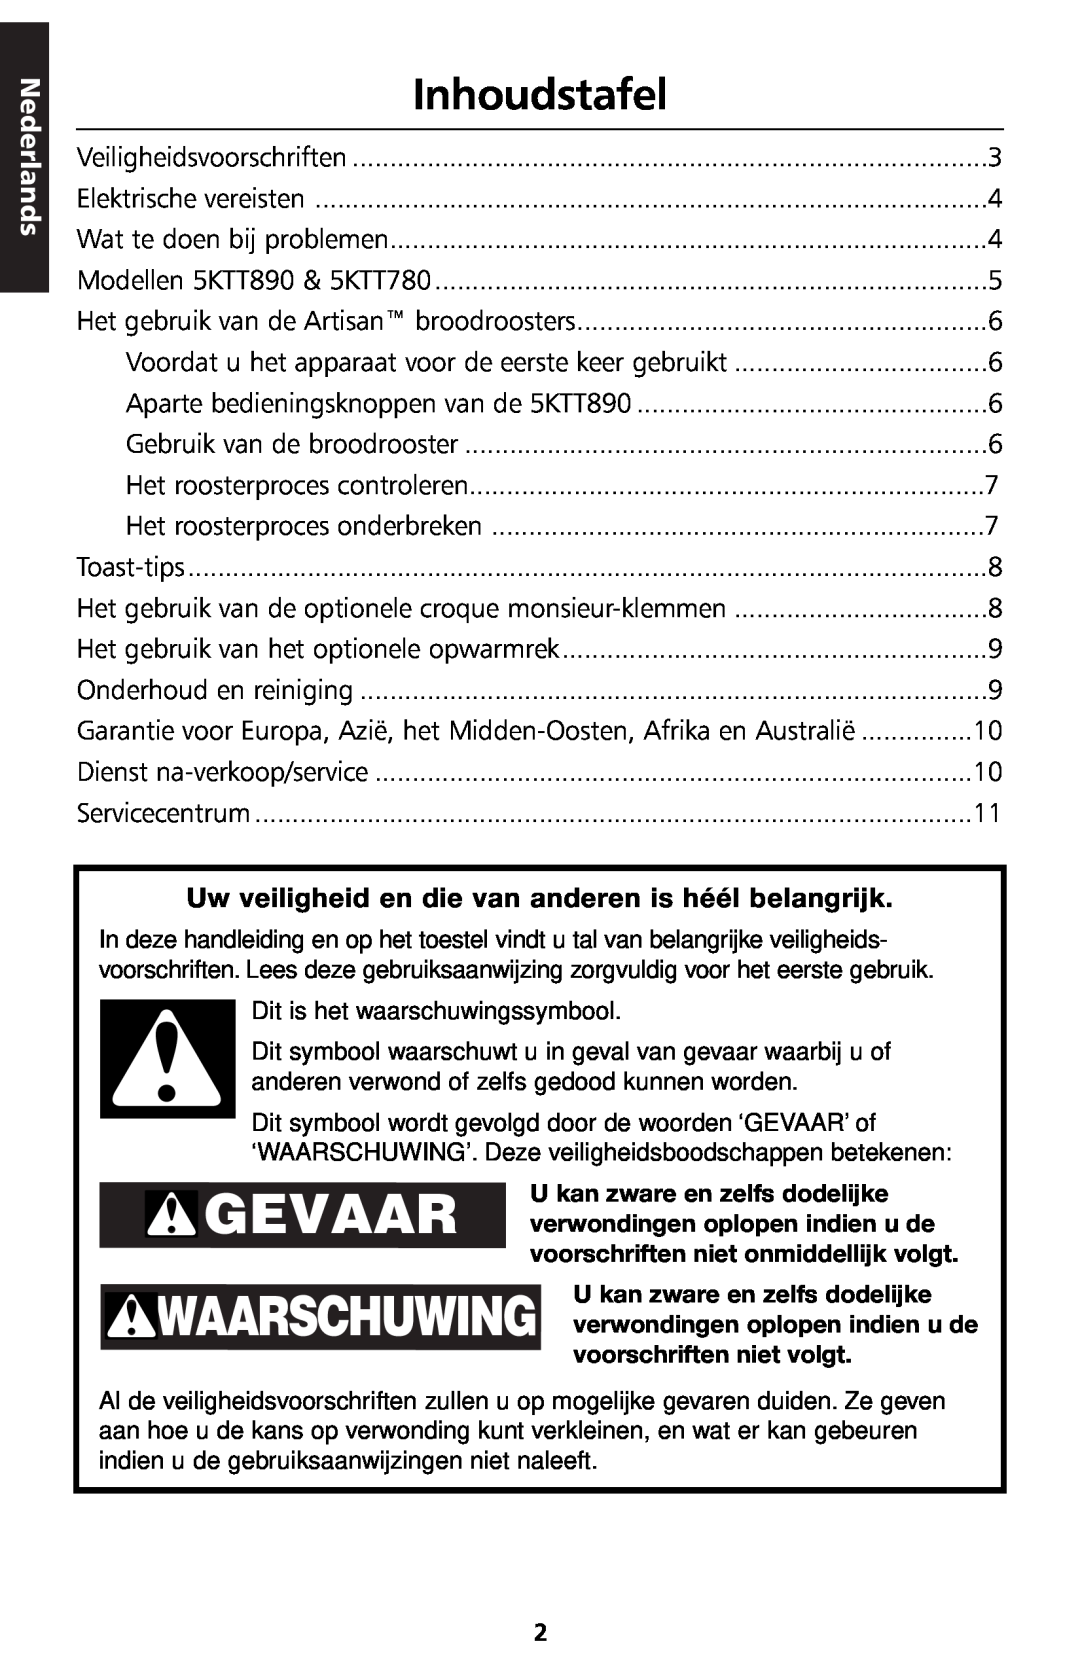 KitchenAid 5KTT890 manual Inhoudstafel, Nederlands 